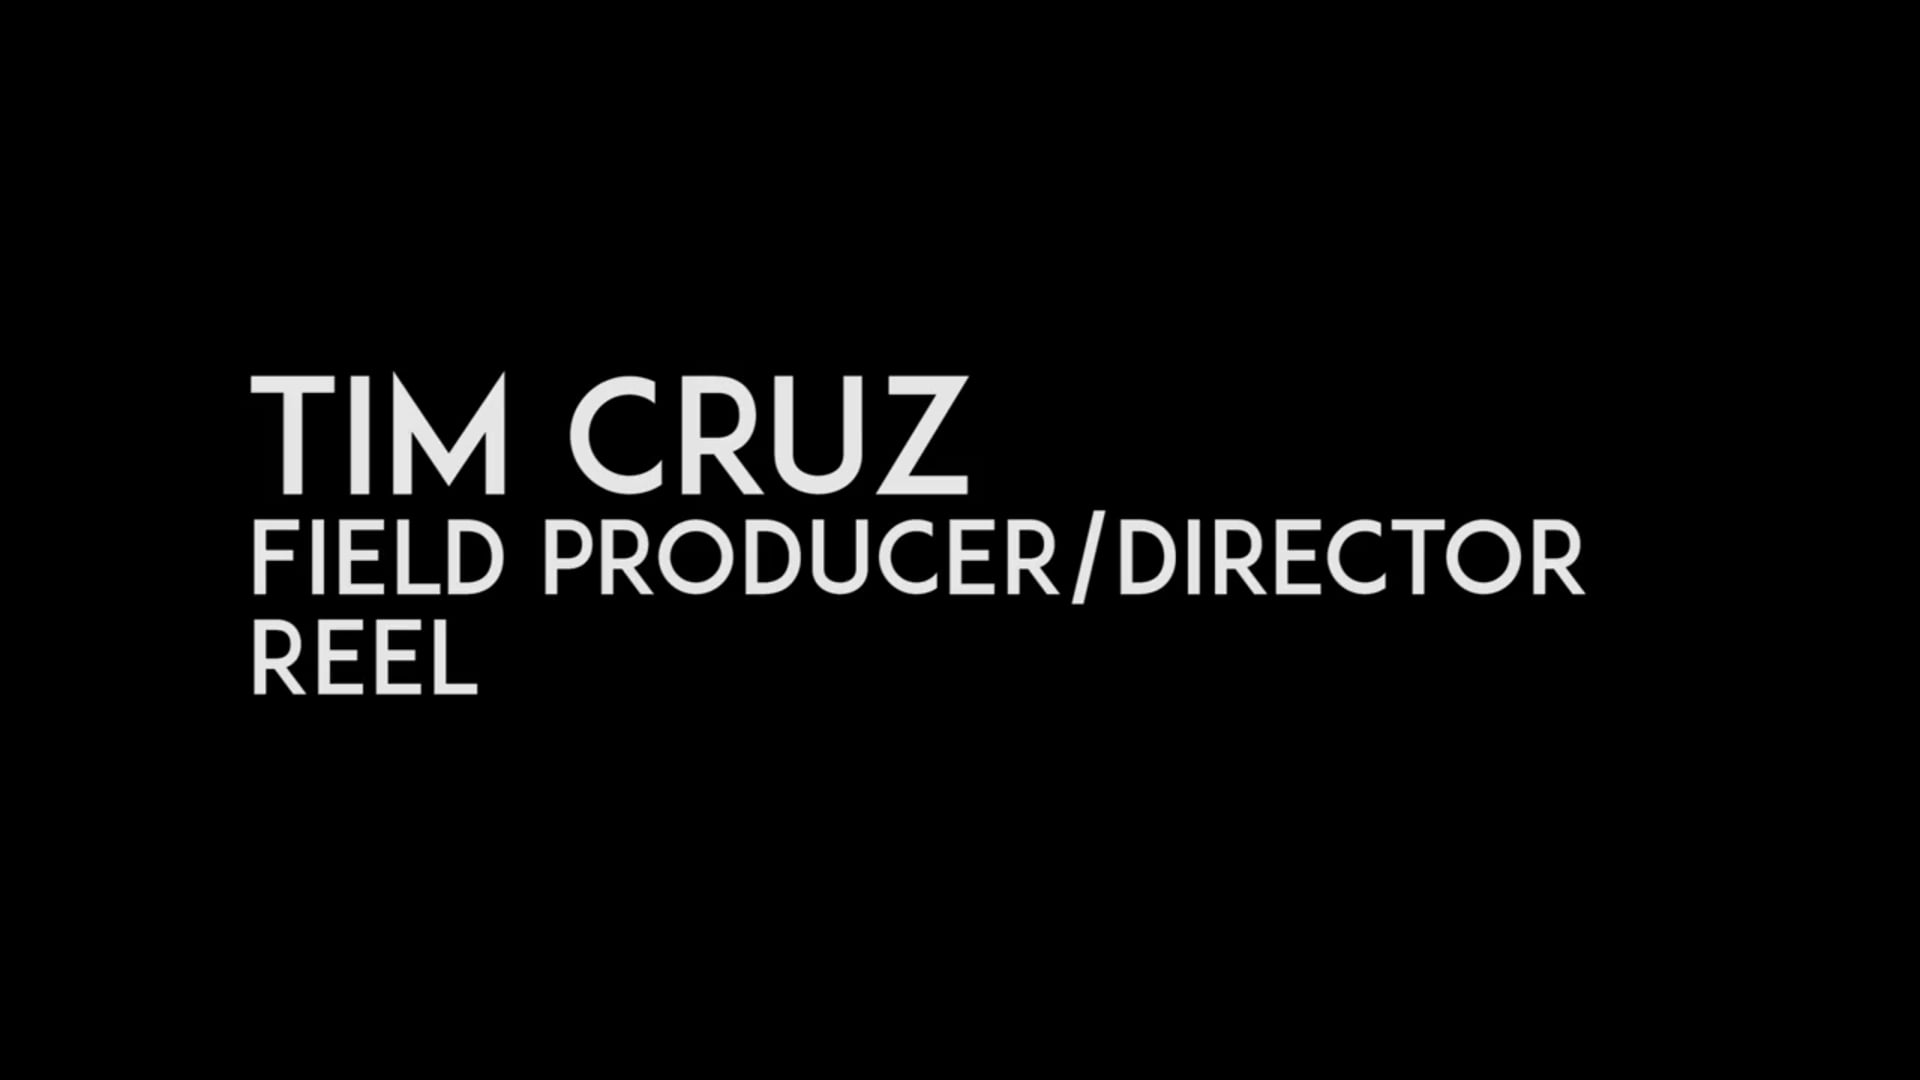 Tim Cruz Field Producer/Director Reel